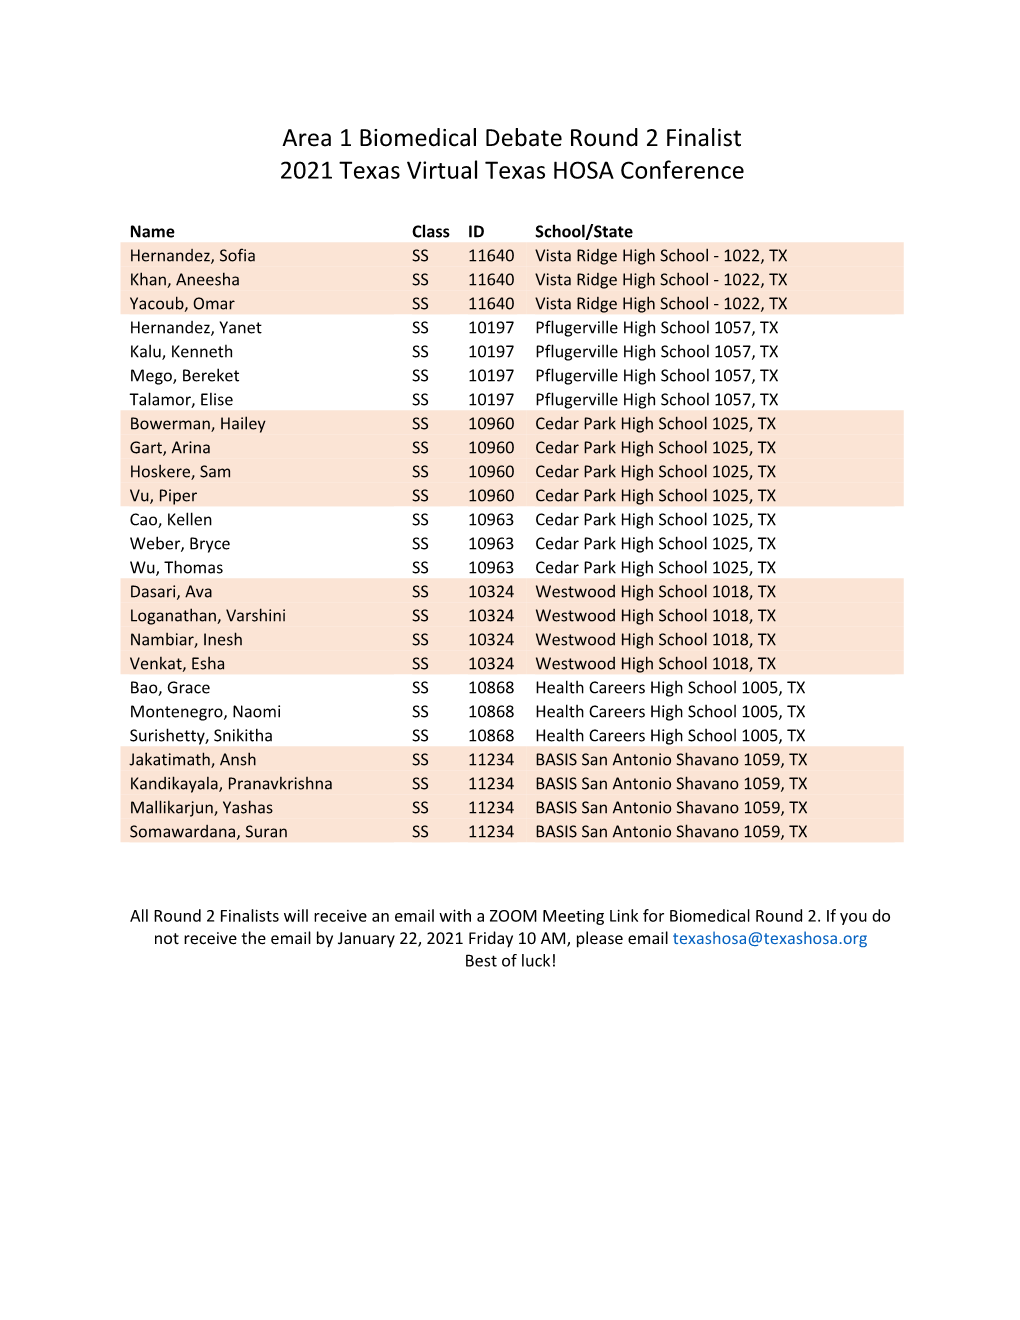 Area 1 Biomedical Debate Round 2 Finalist 2021 Texas Virtual Texas HOSA Conference